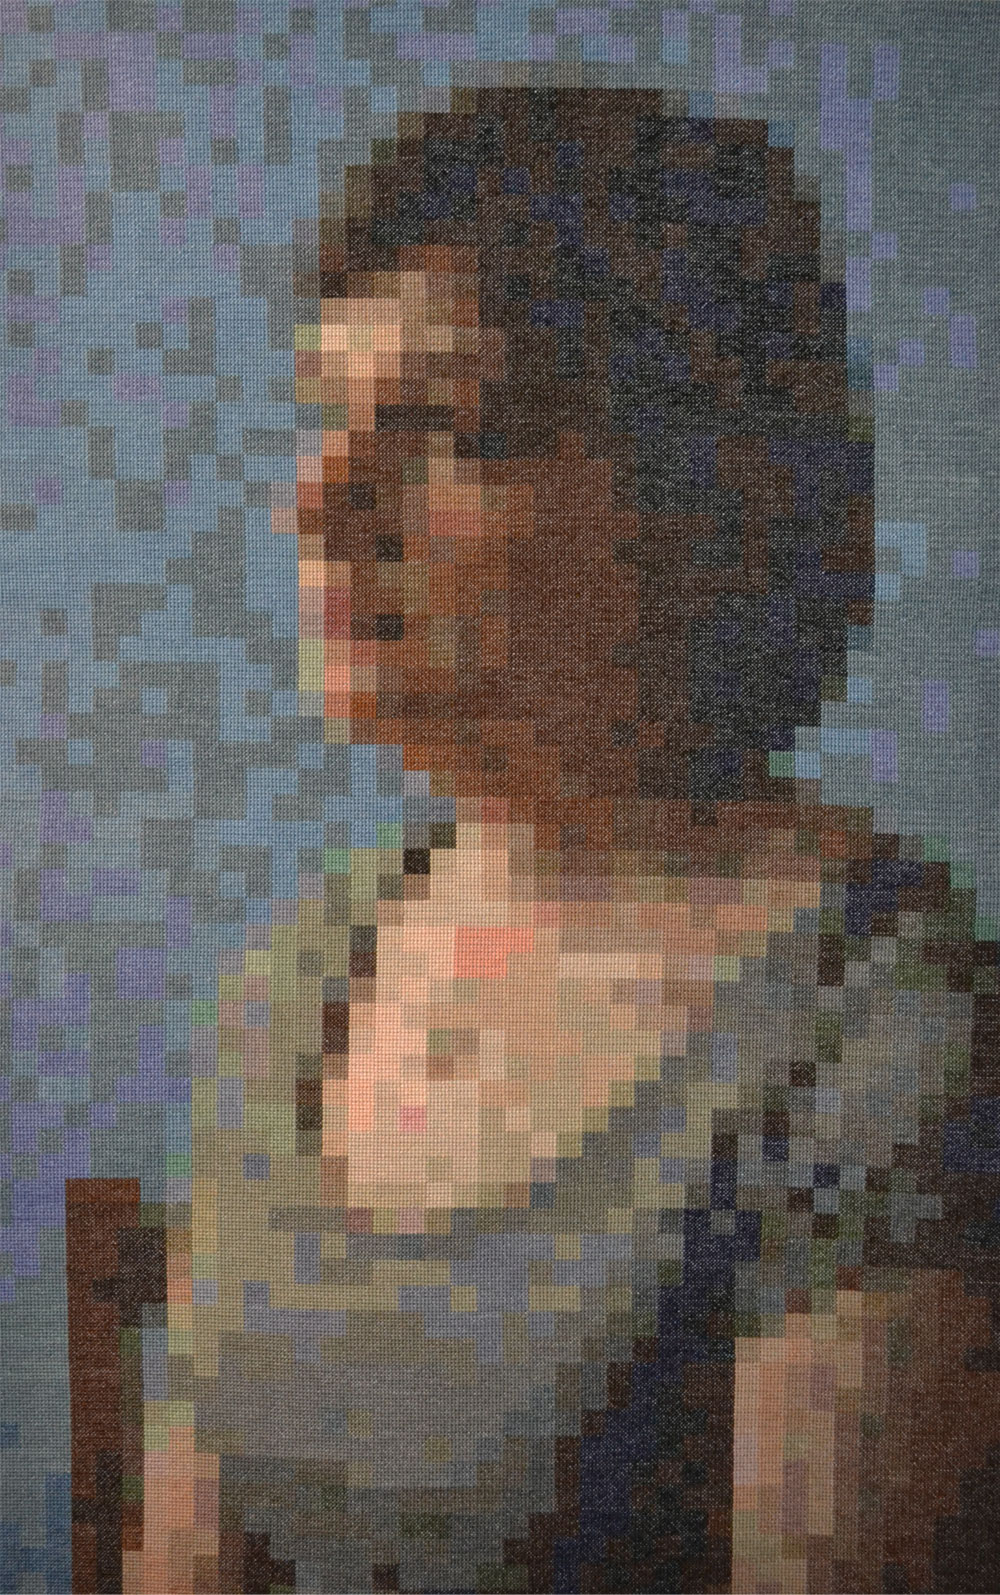 Reduction (Self-Portrait) - Cross-stitching on Aida cloth, 34x23 - 2015 - 2017